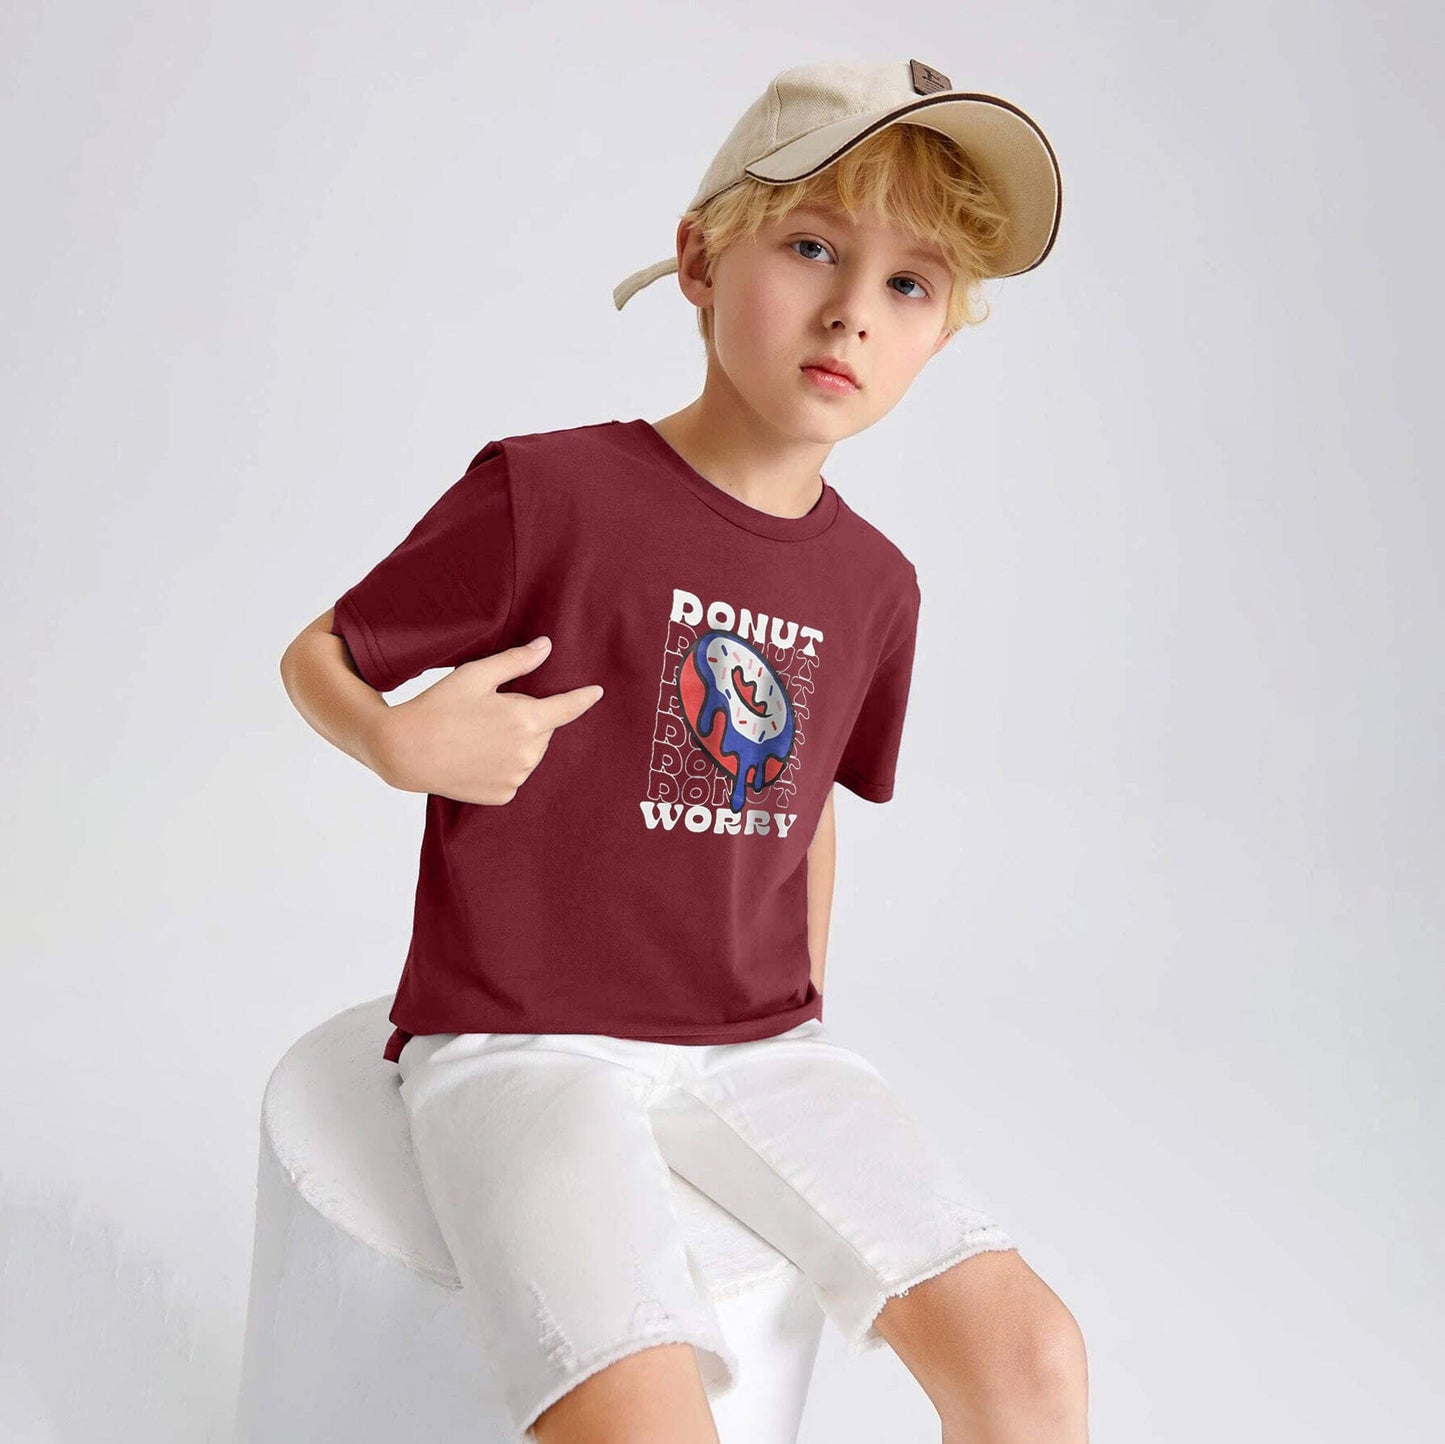 Polo Republica Boy's Donut Worry Printed Tee Shirt Boy's Tee Shirt Polo Republica Maroon 1-2 Years 